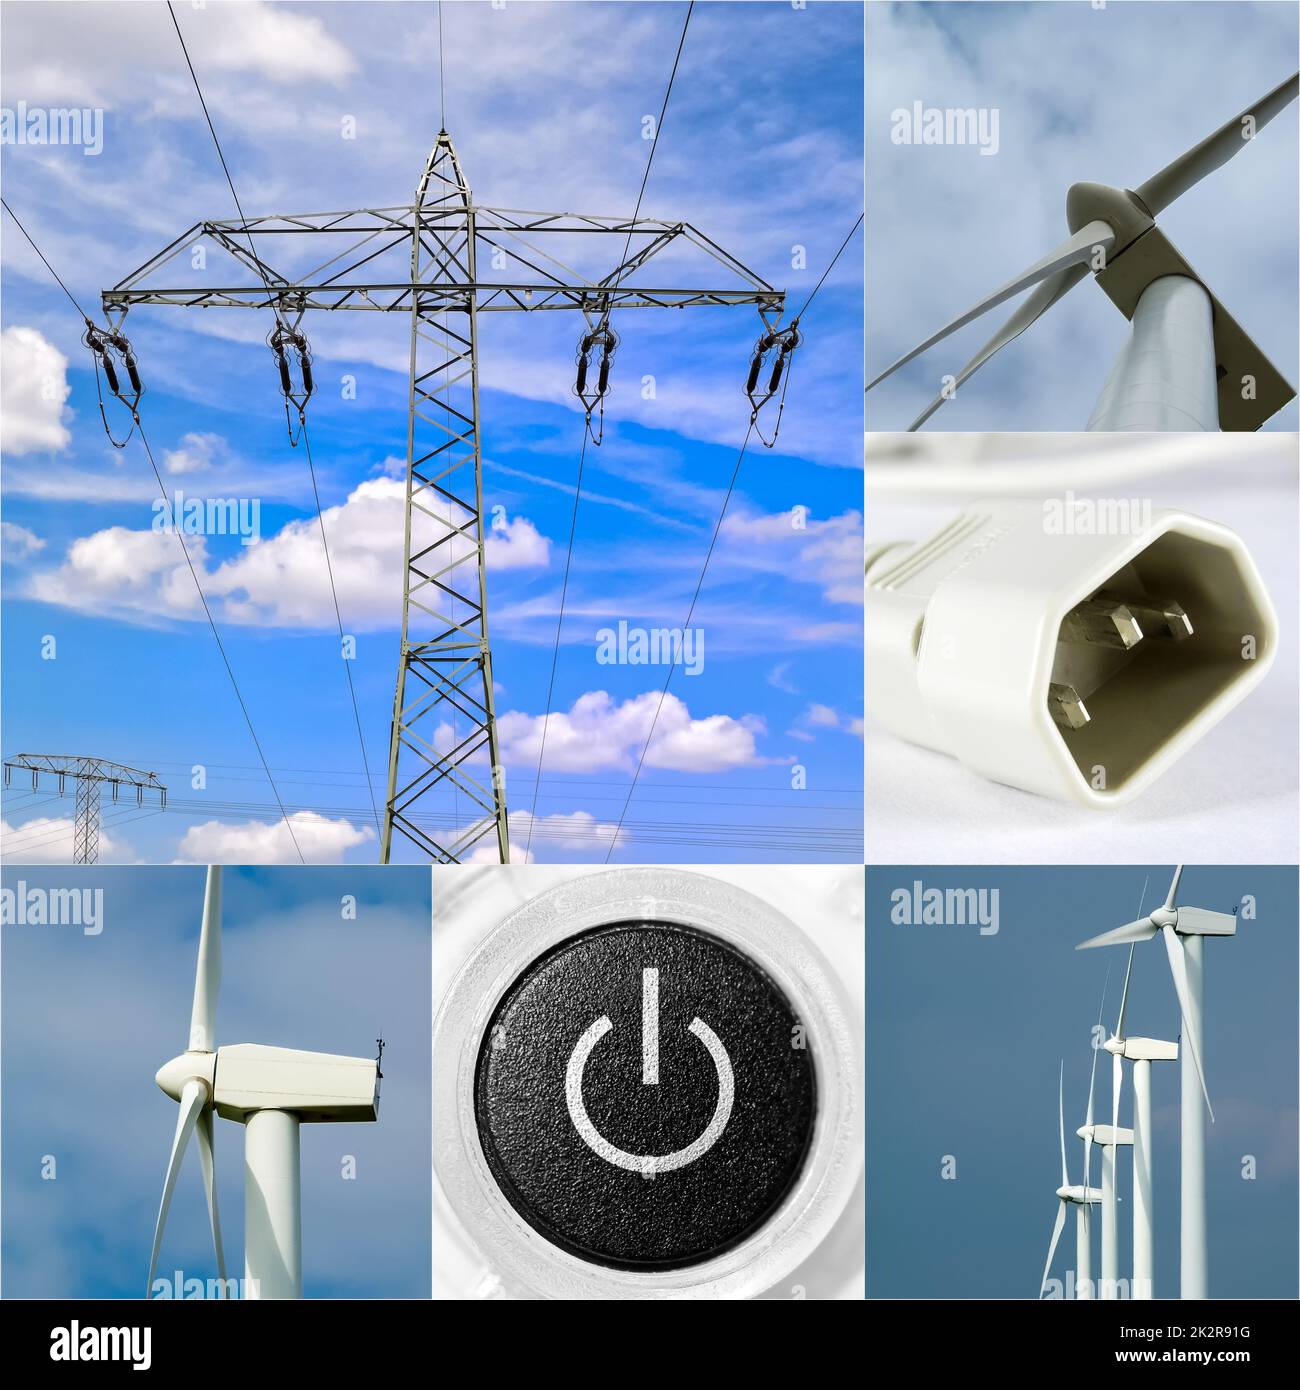 Wind turbine, wind turbine in the wind farm, energy generation and power supply through renewable energy, wind energy Stock Photo